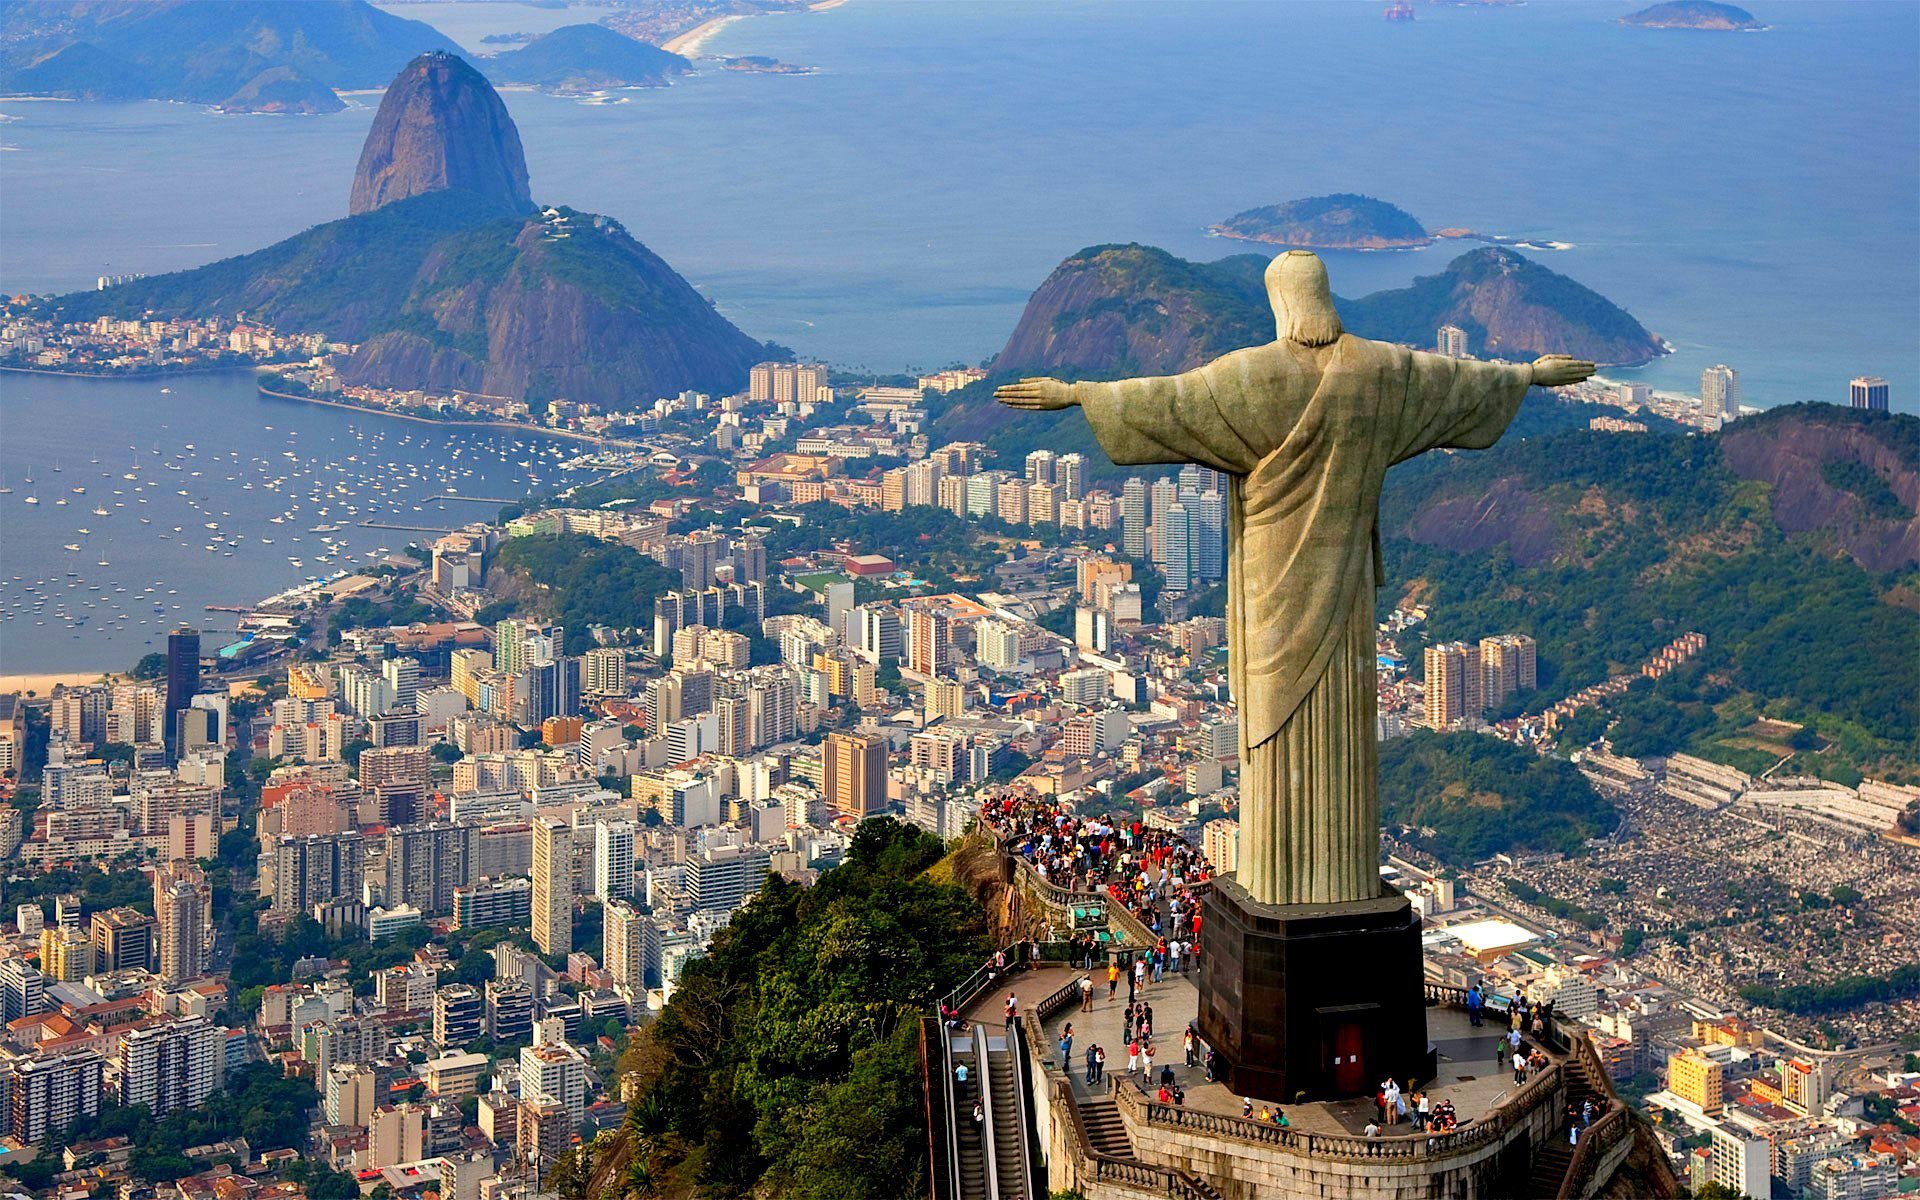 Christ the Redeemer statue overlooking Rio de Janeiro atop Mount Corcovado in Brazil. (Photo: Bradutch.com)